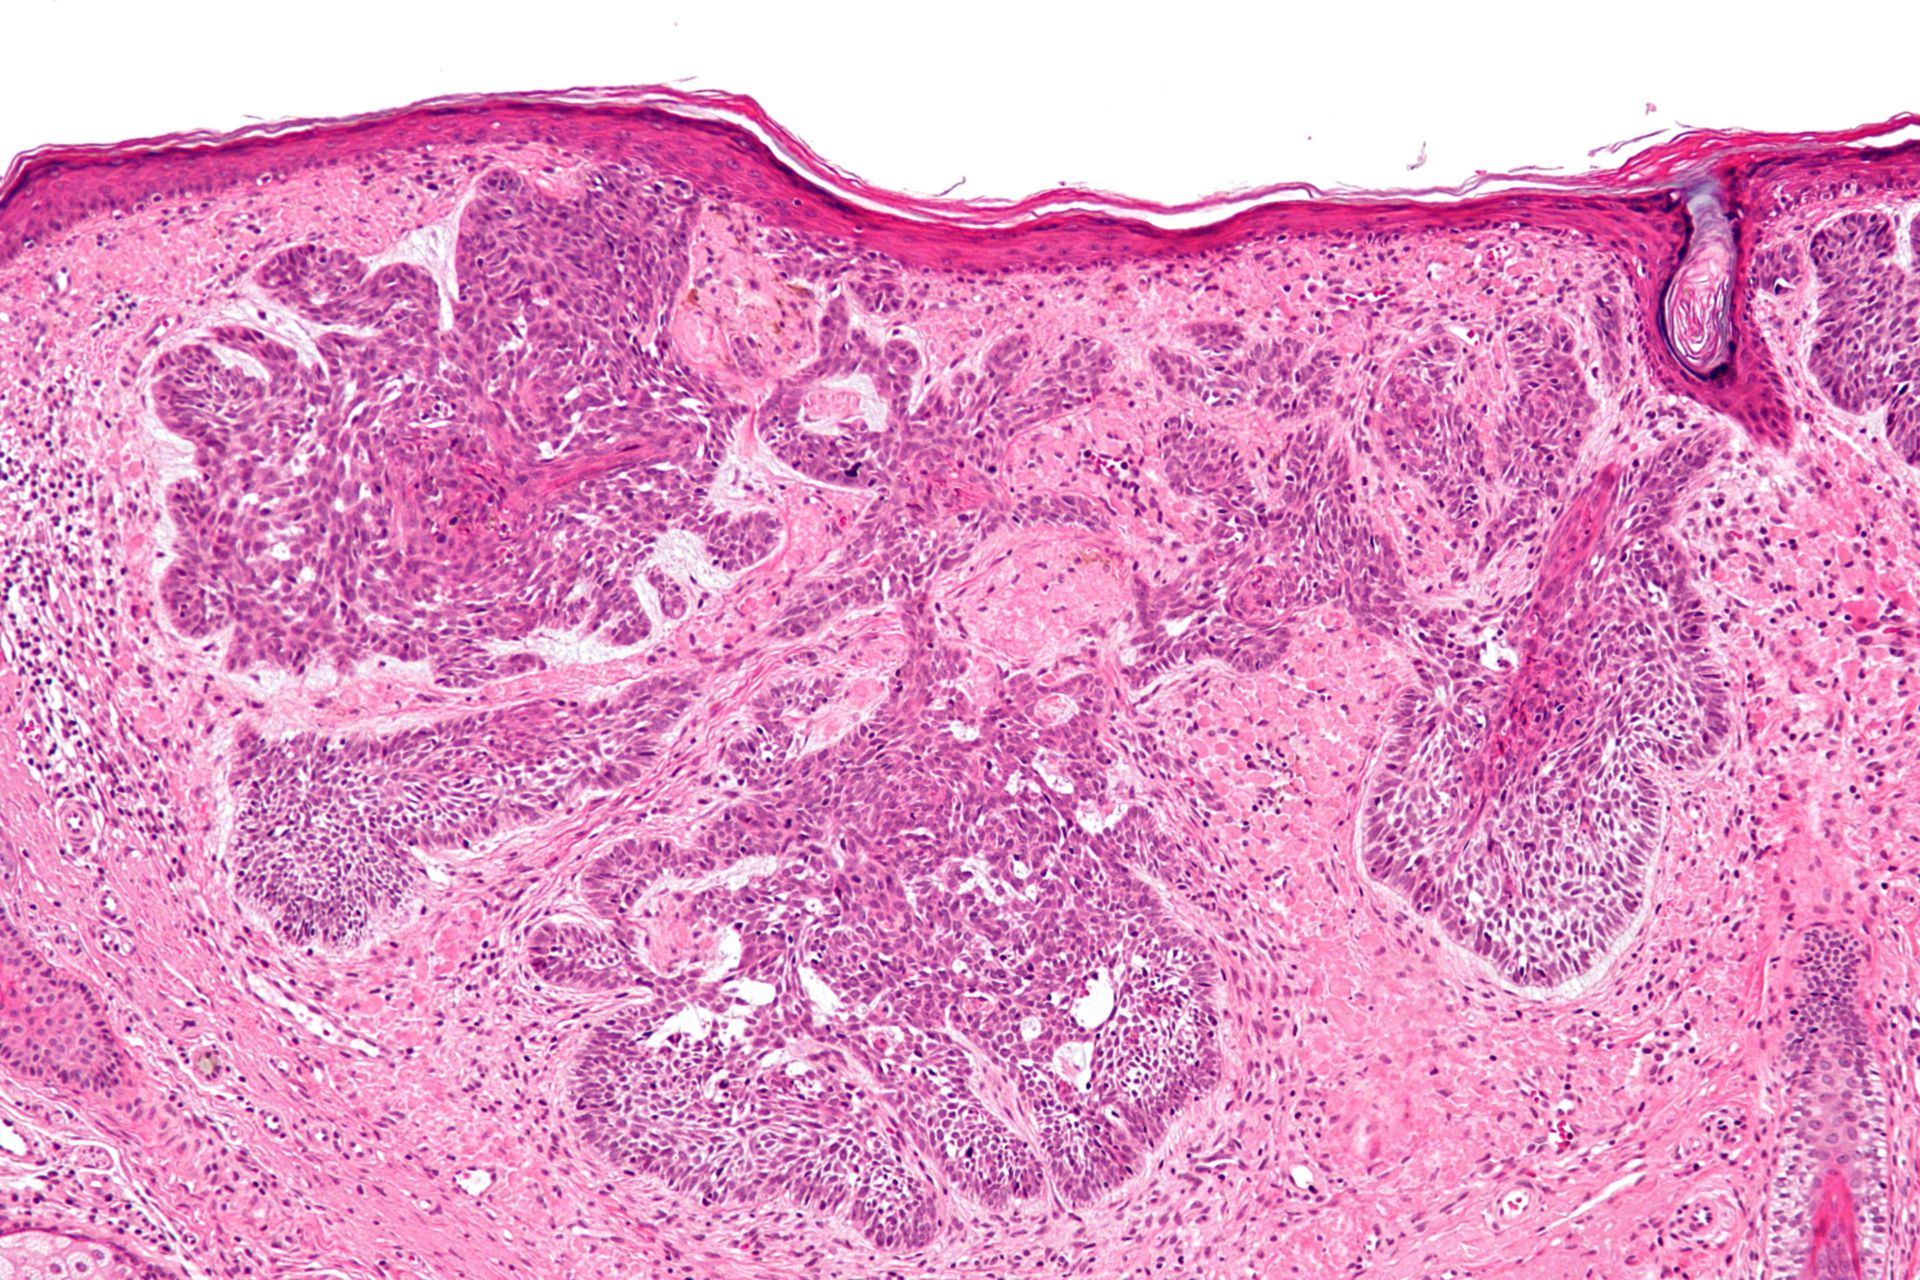 Basalioma (basal cell carcinoma, histology)